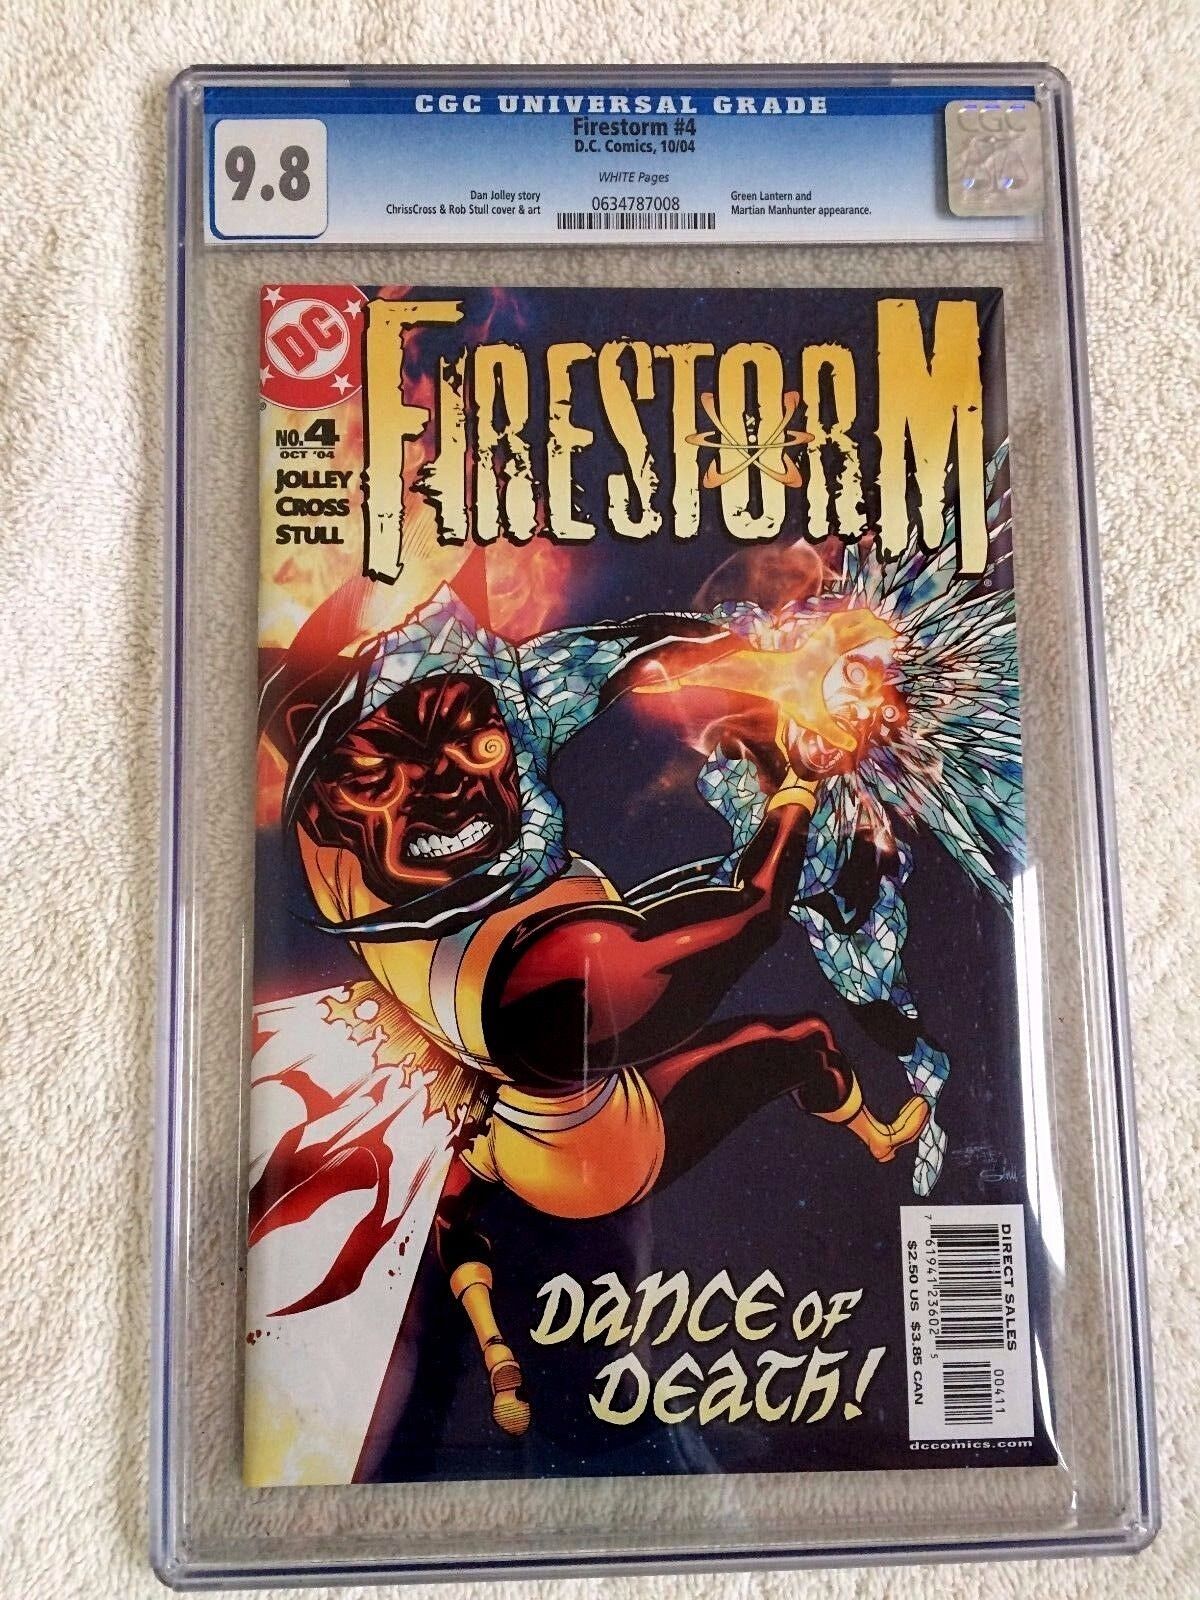 Firestorm #4 DC Comics October 2004 CGC 9.8 White pages 